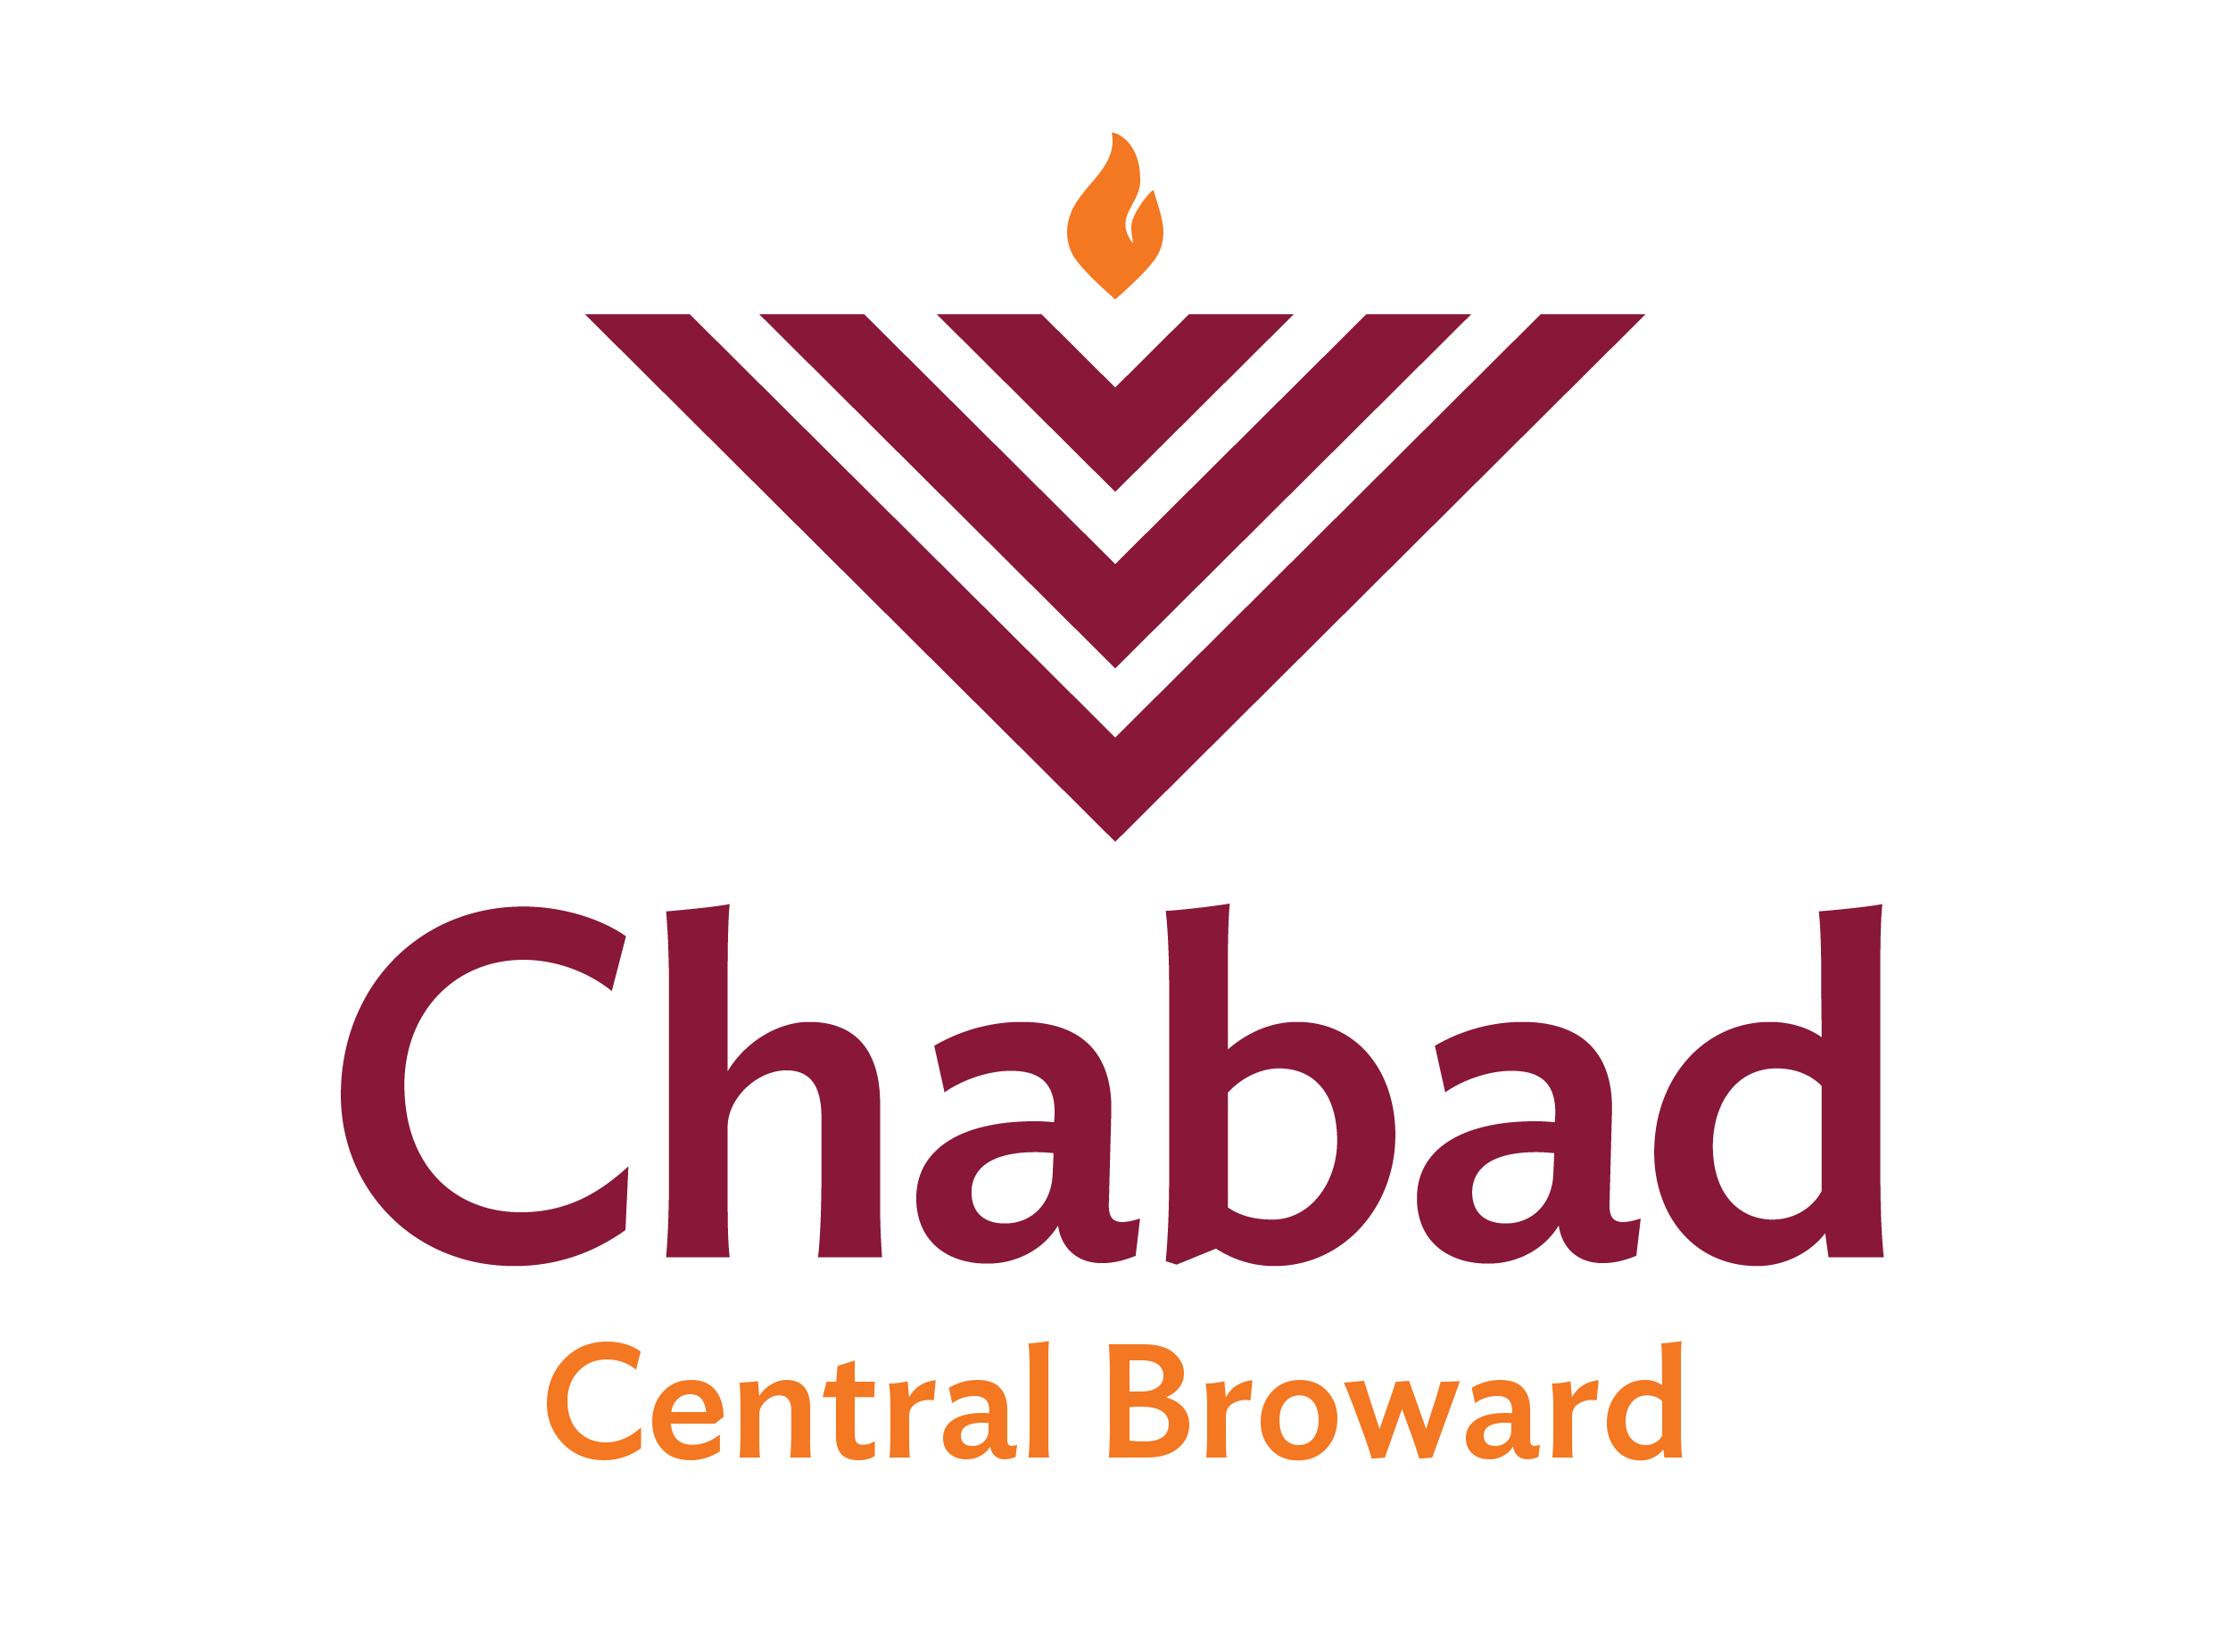 Chabad Central Broward